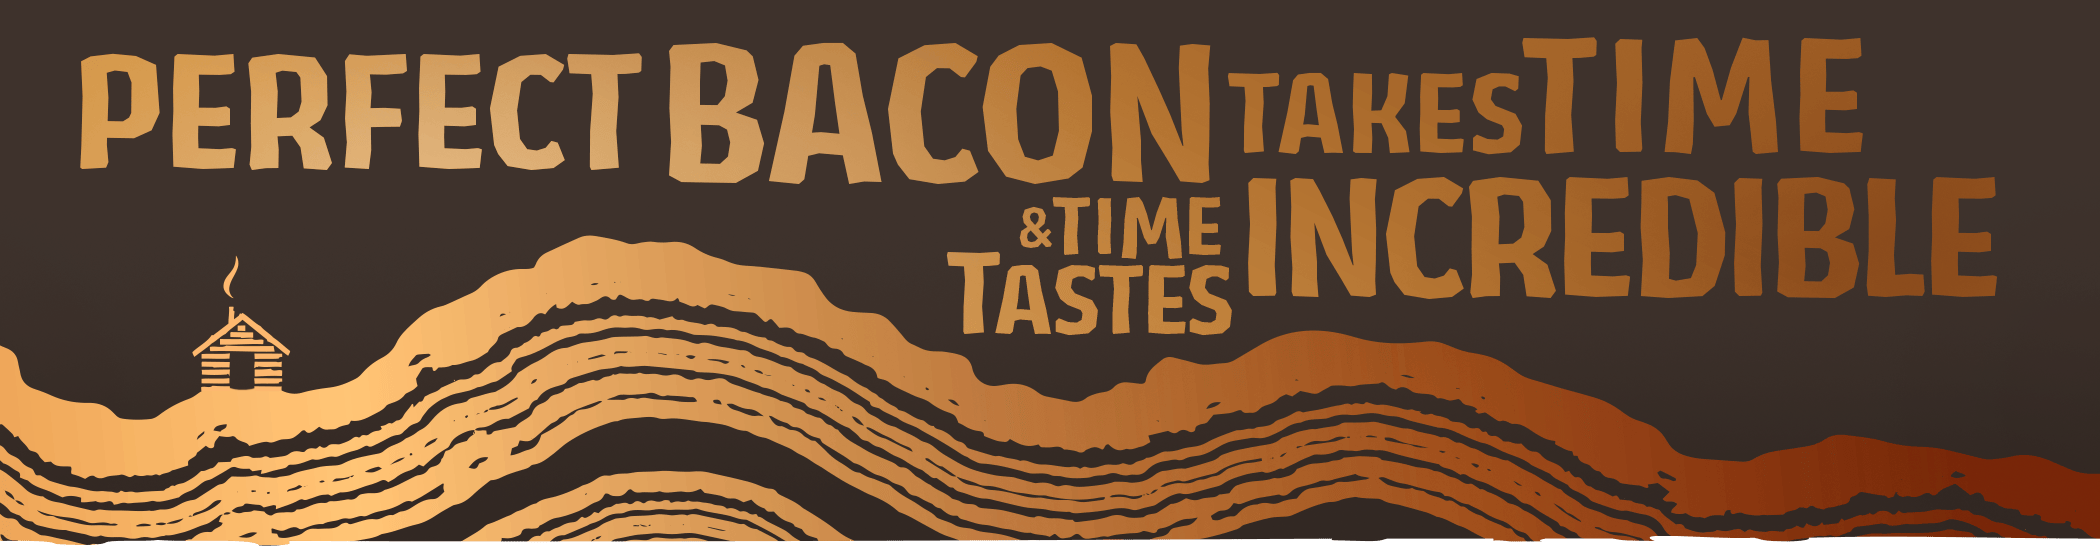 Perfect bacon takes time & time tastes incredible